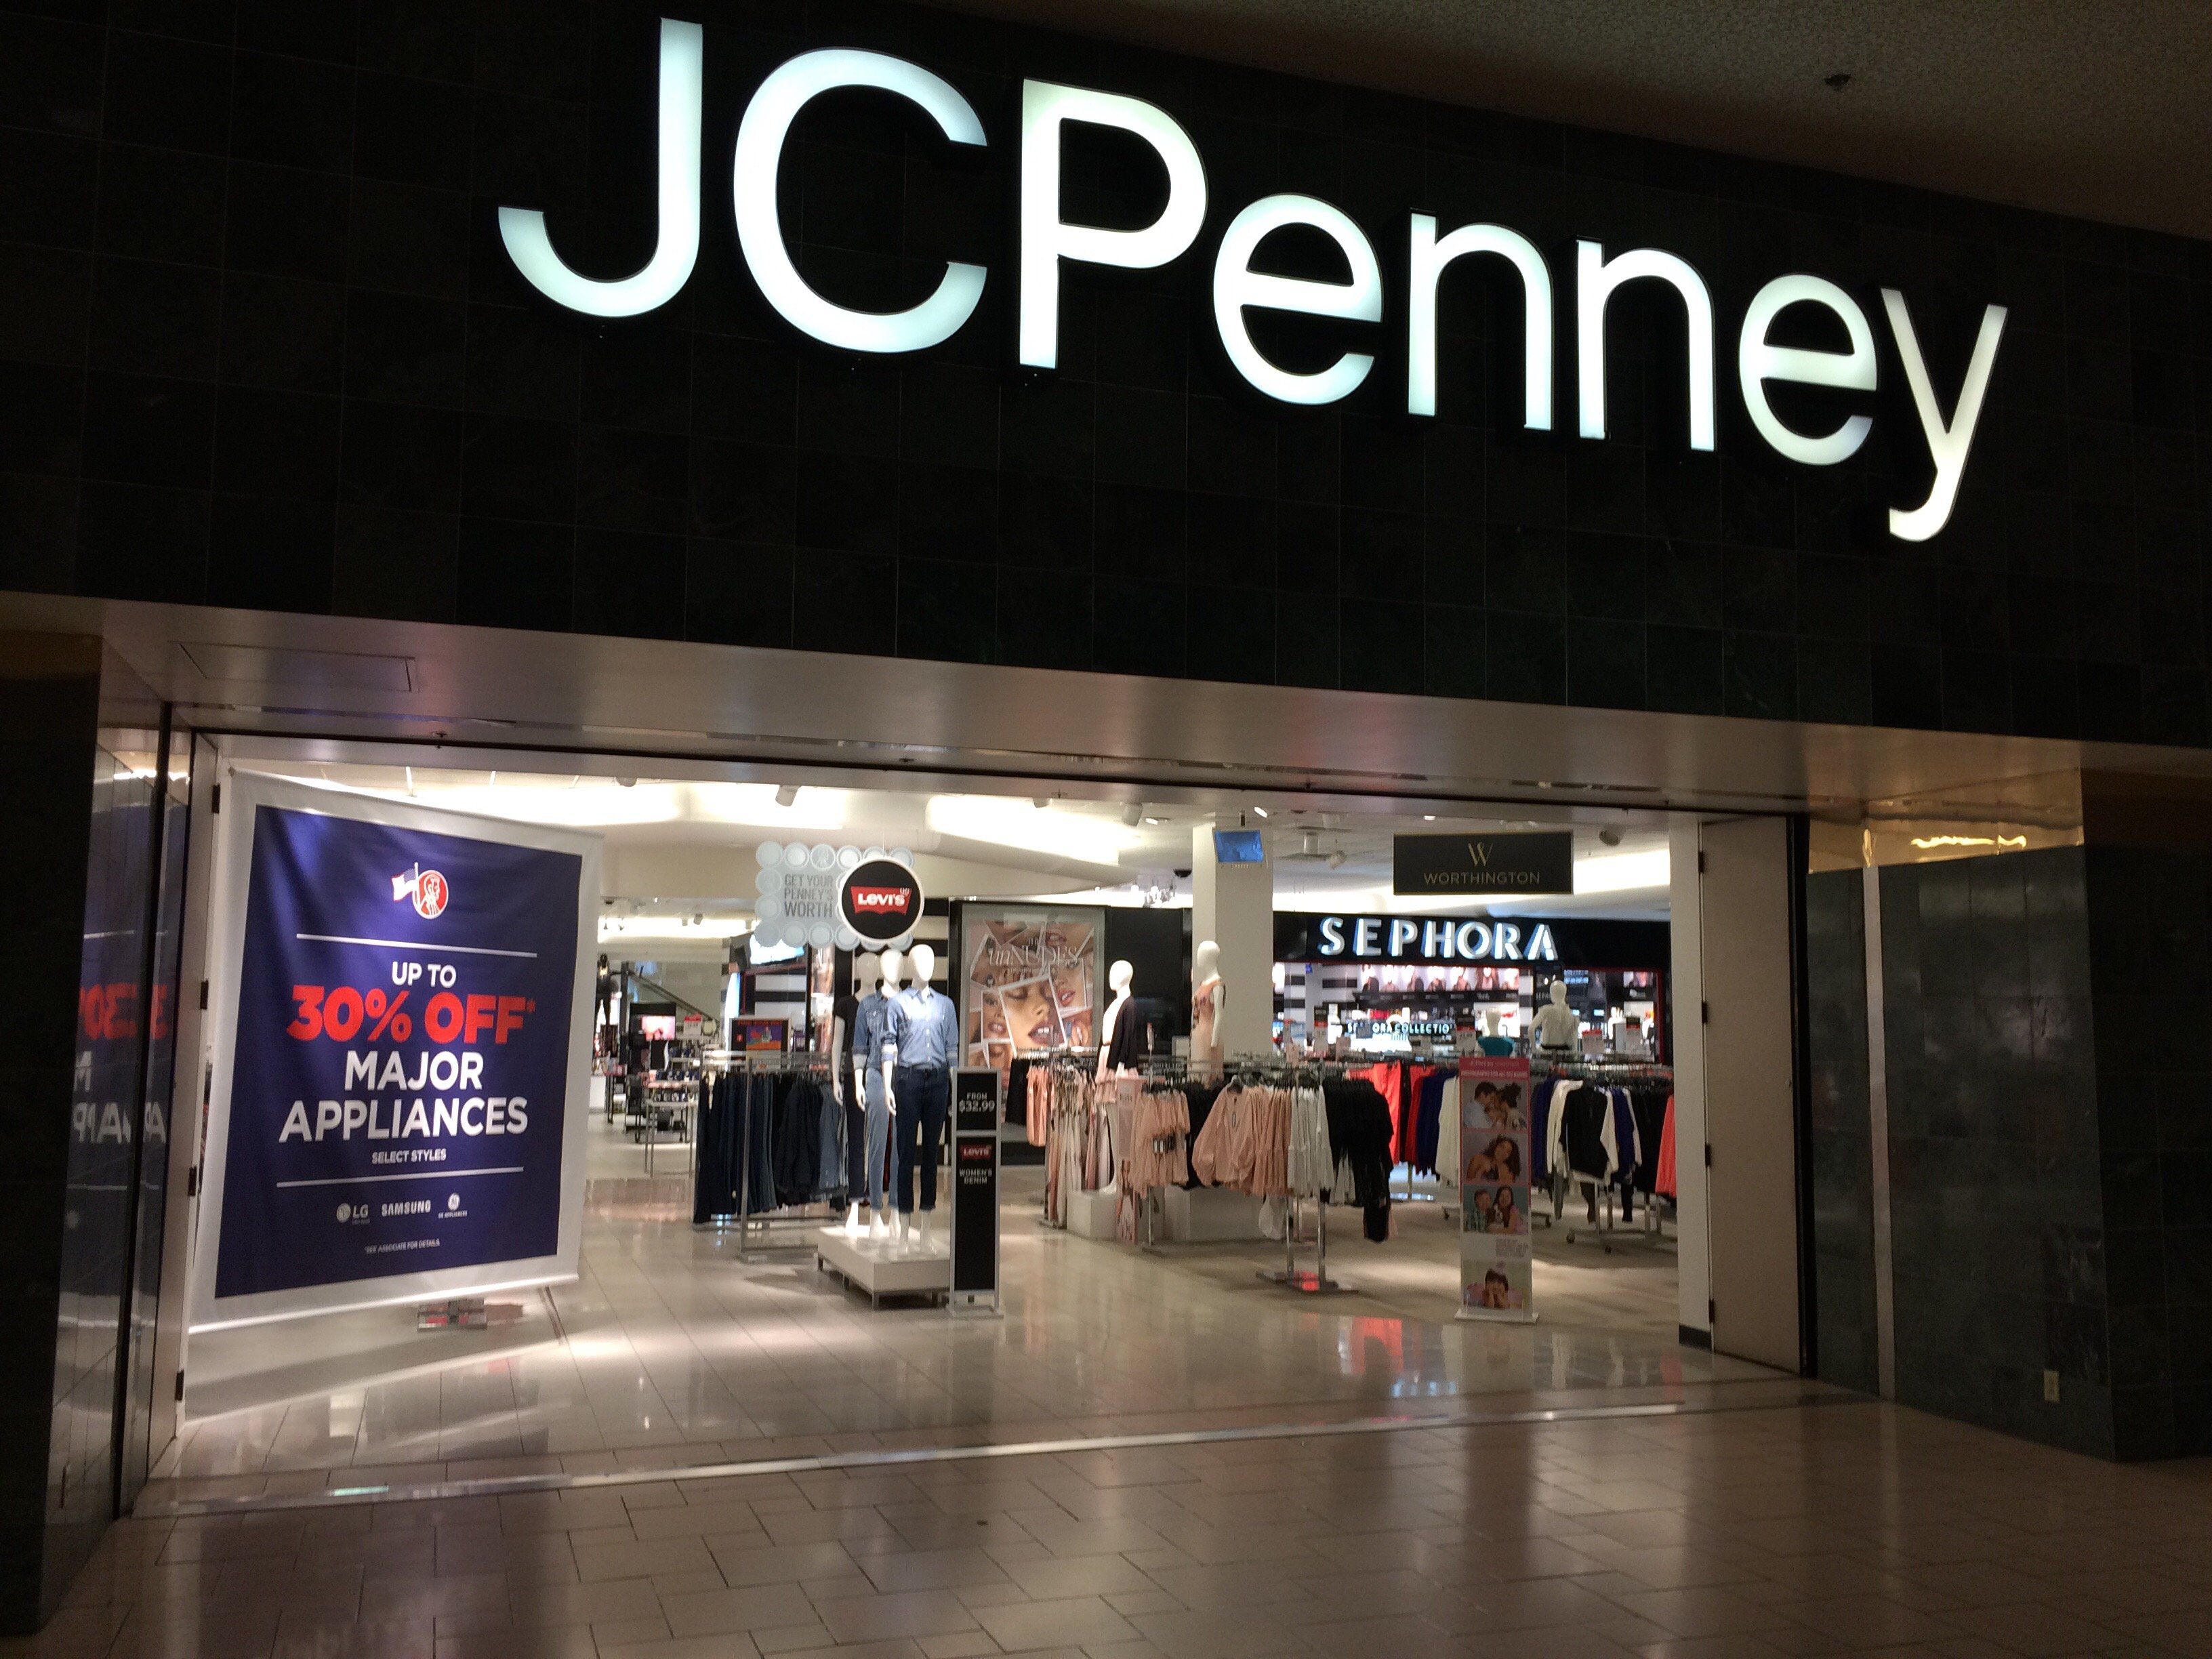 Sephora, J.C. Penney Celebrate 10 Years